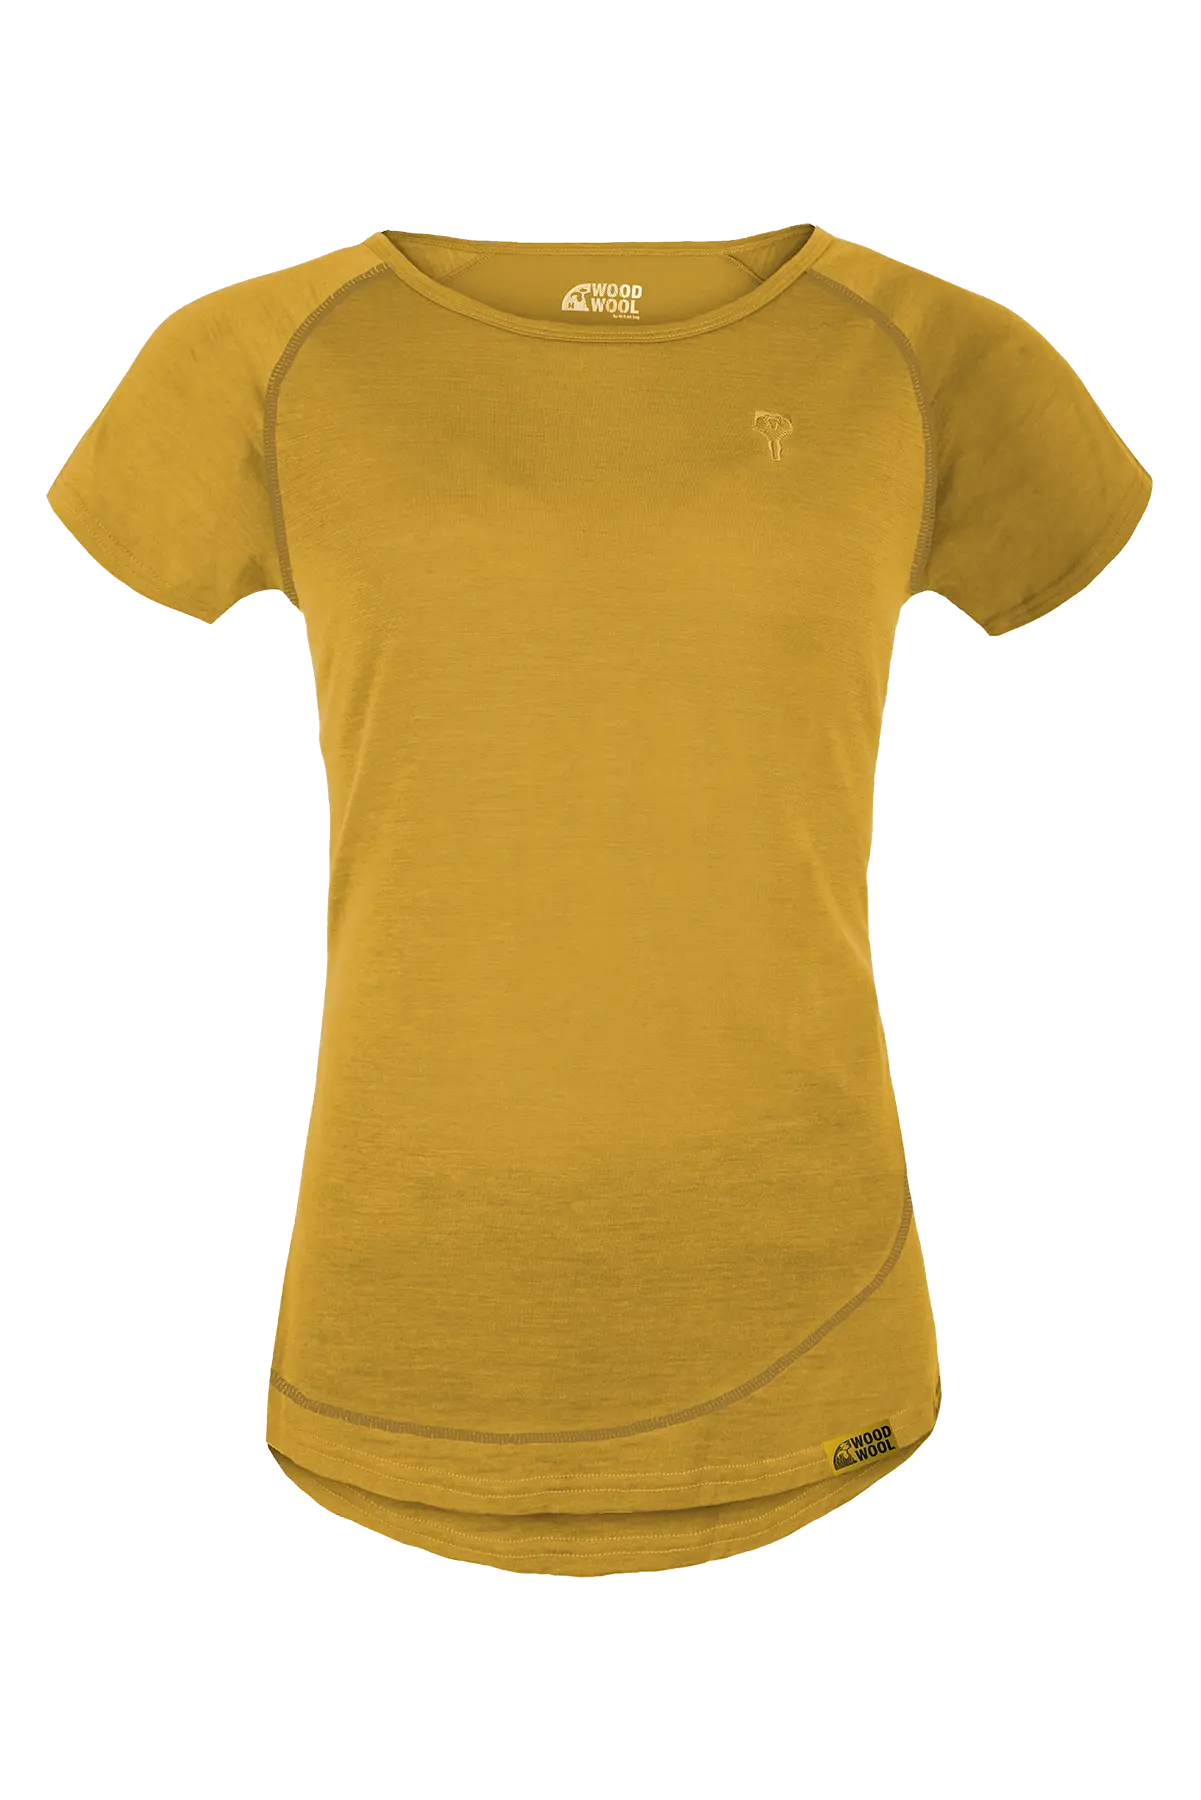 gruezi-bag-woodwool-t-shirt-lady-burnham-2250-2254-2250-6002-daisy-daze-yellow-amainfrei Kopie